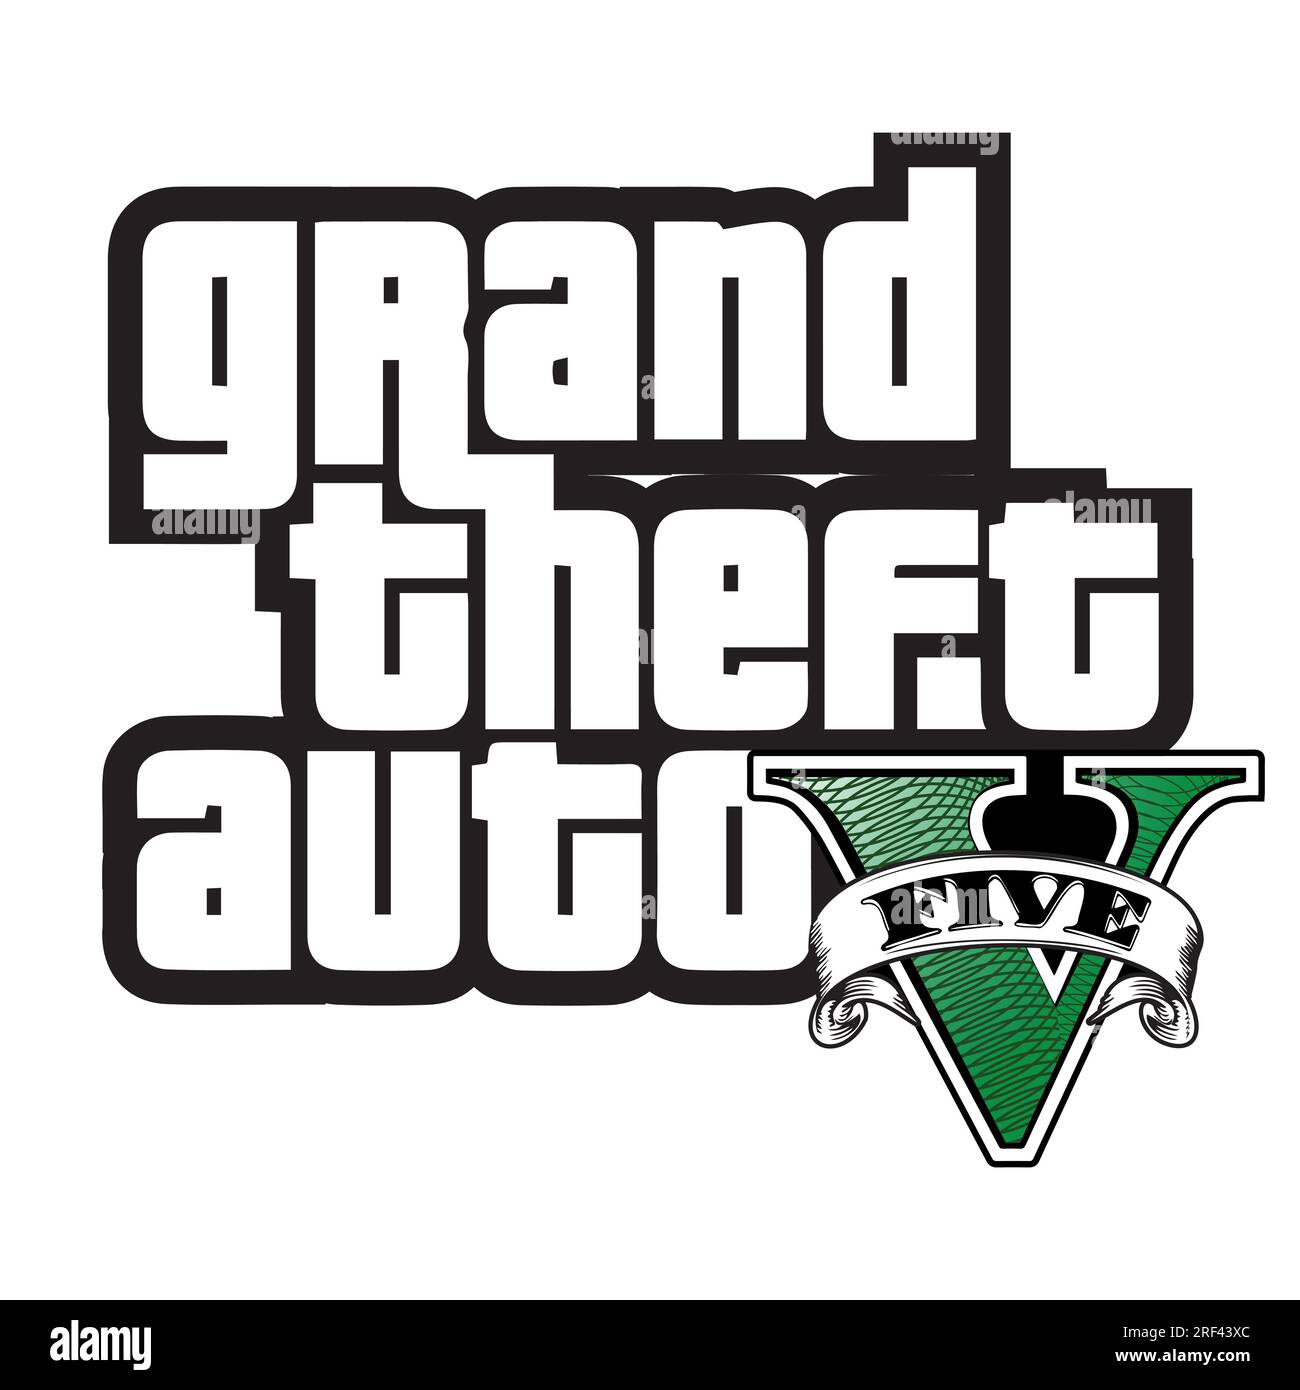 Grand Theft Auto V  PlayStation (Indonesia)